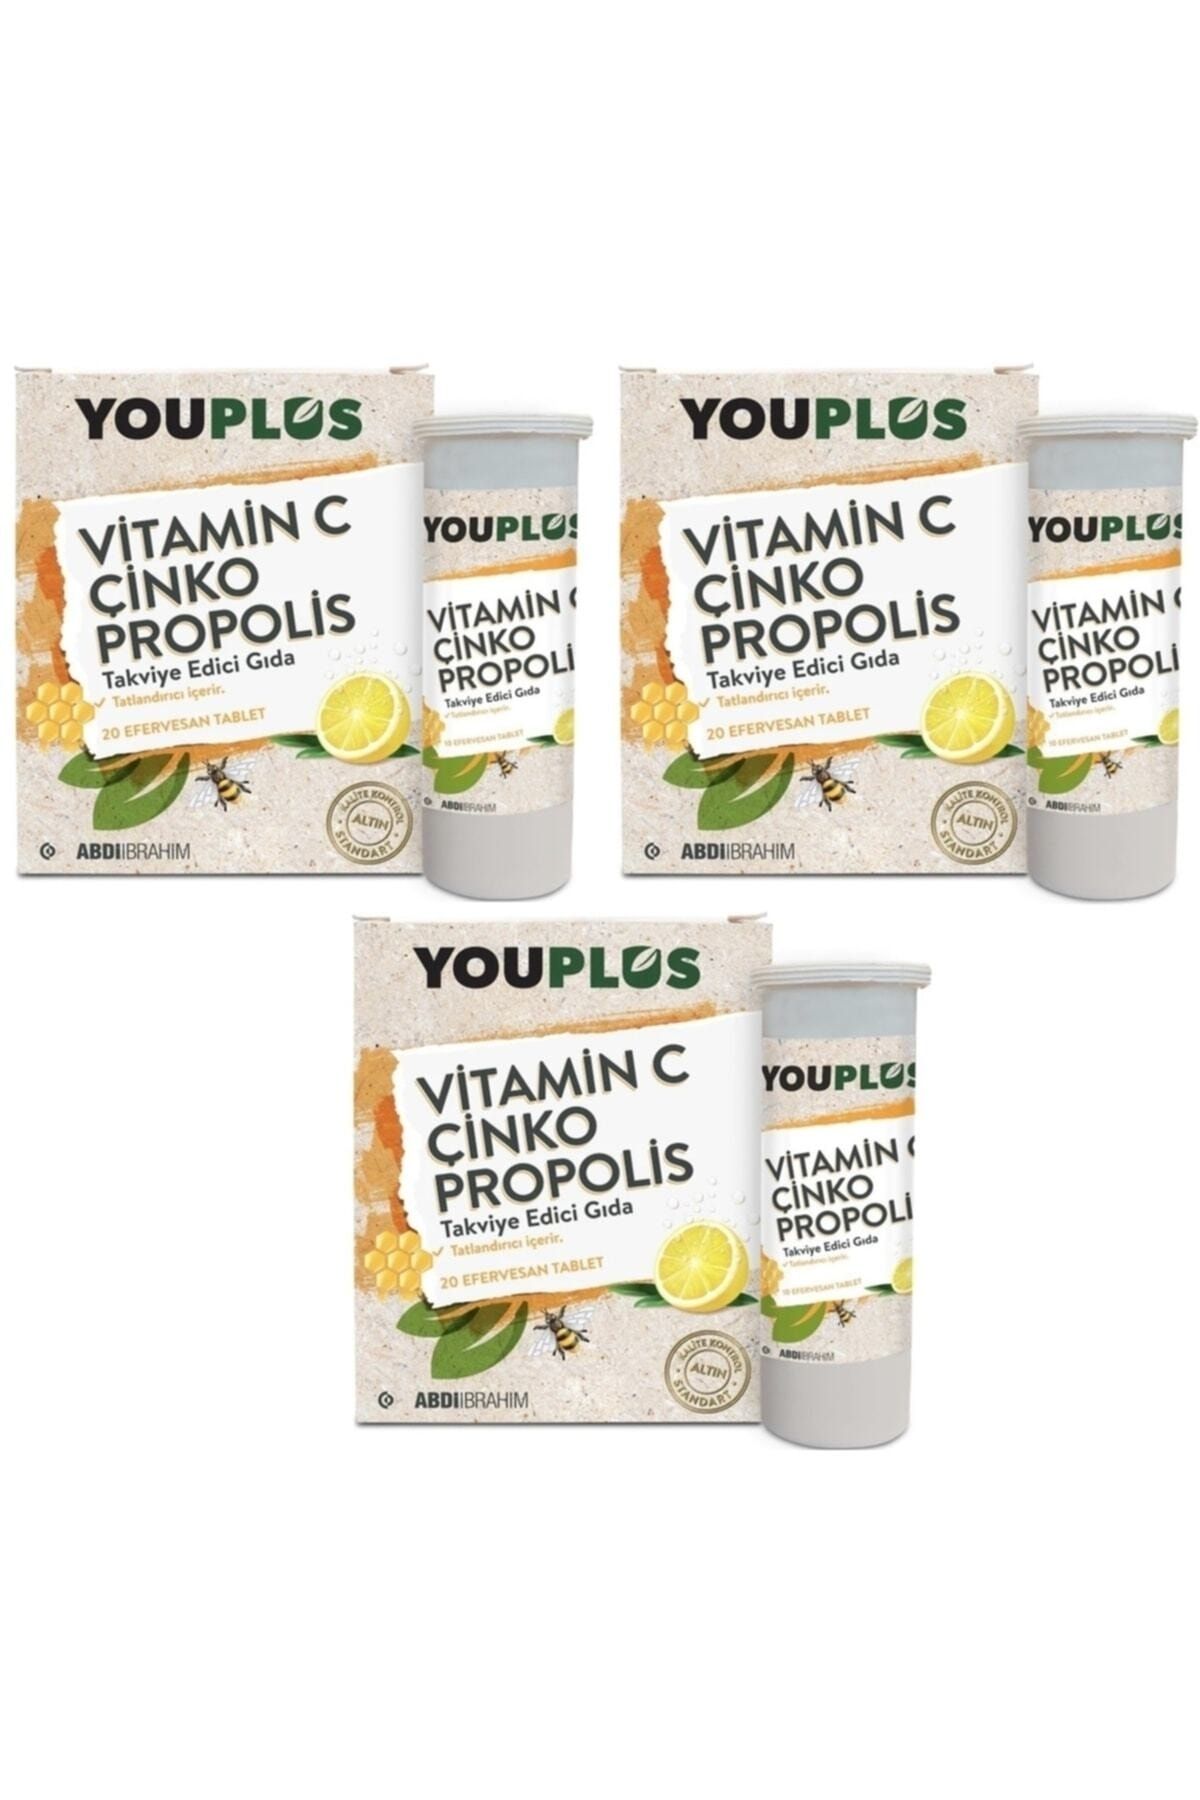 ABDİİBRAHİM Youplus Vitamin C Çinko Propolis 20 Efervesan Tablet 3 Adet